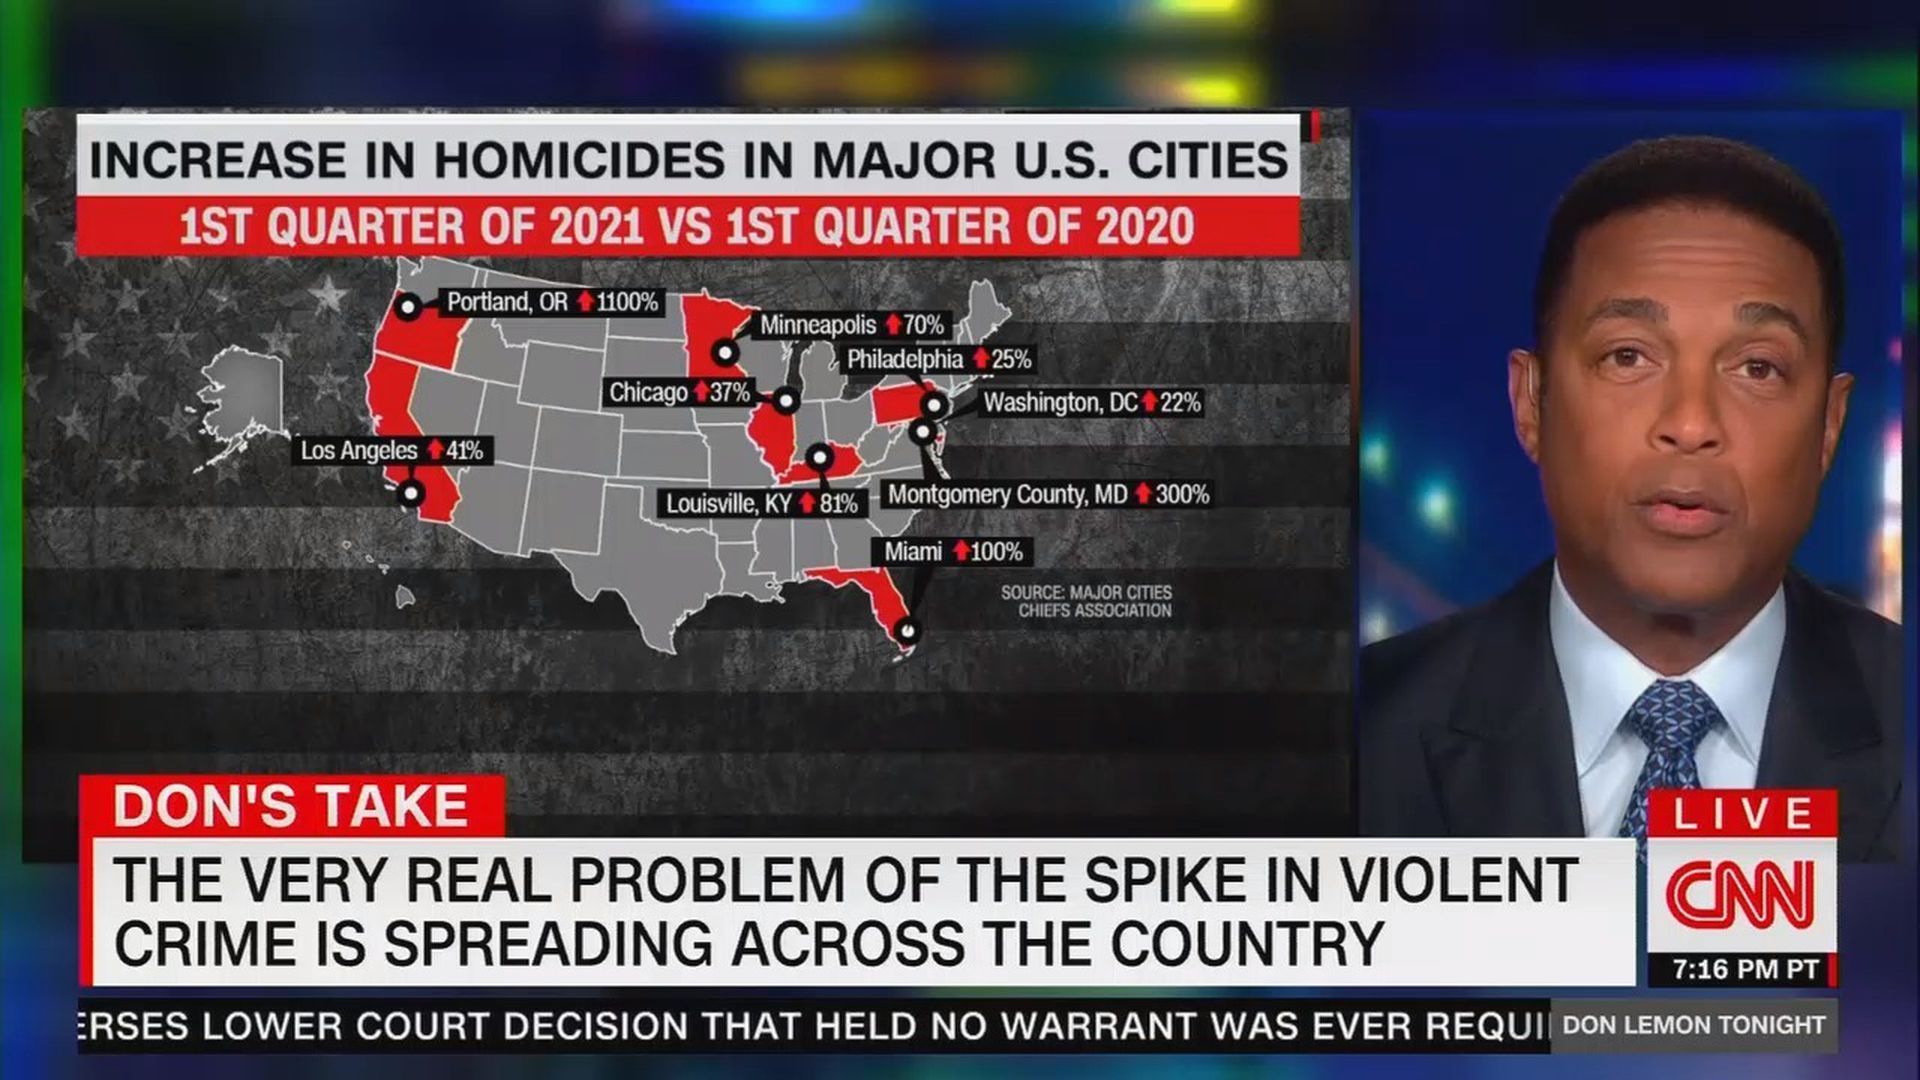 CNN screenshot of gun violence graphic